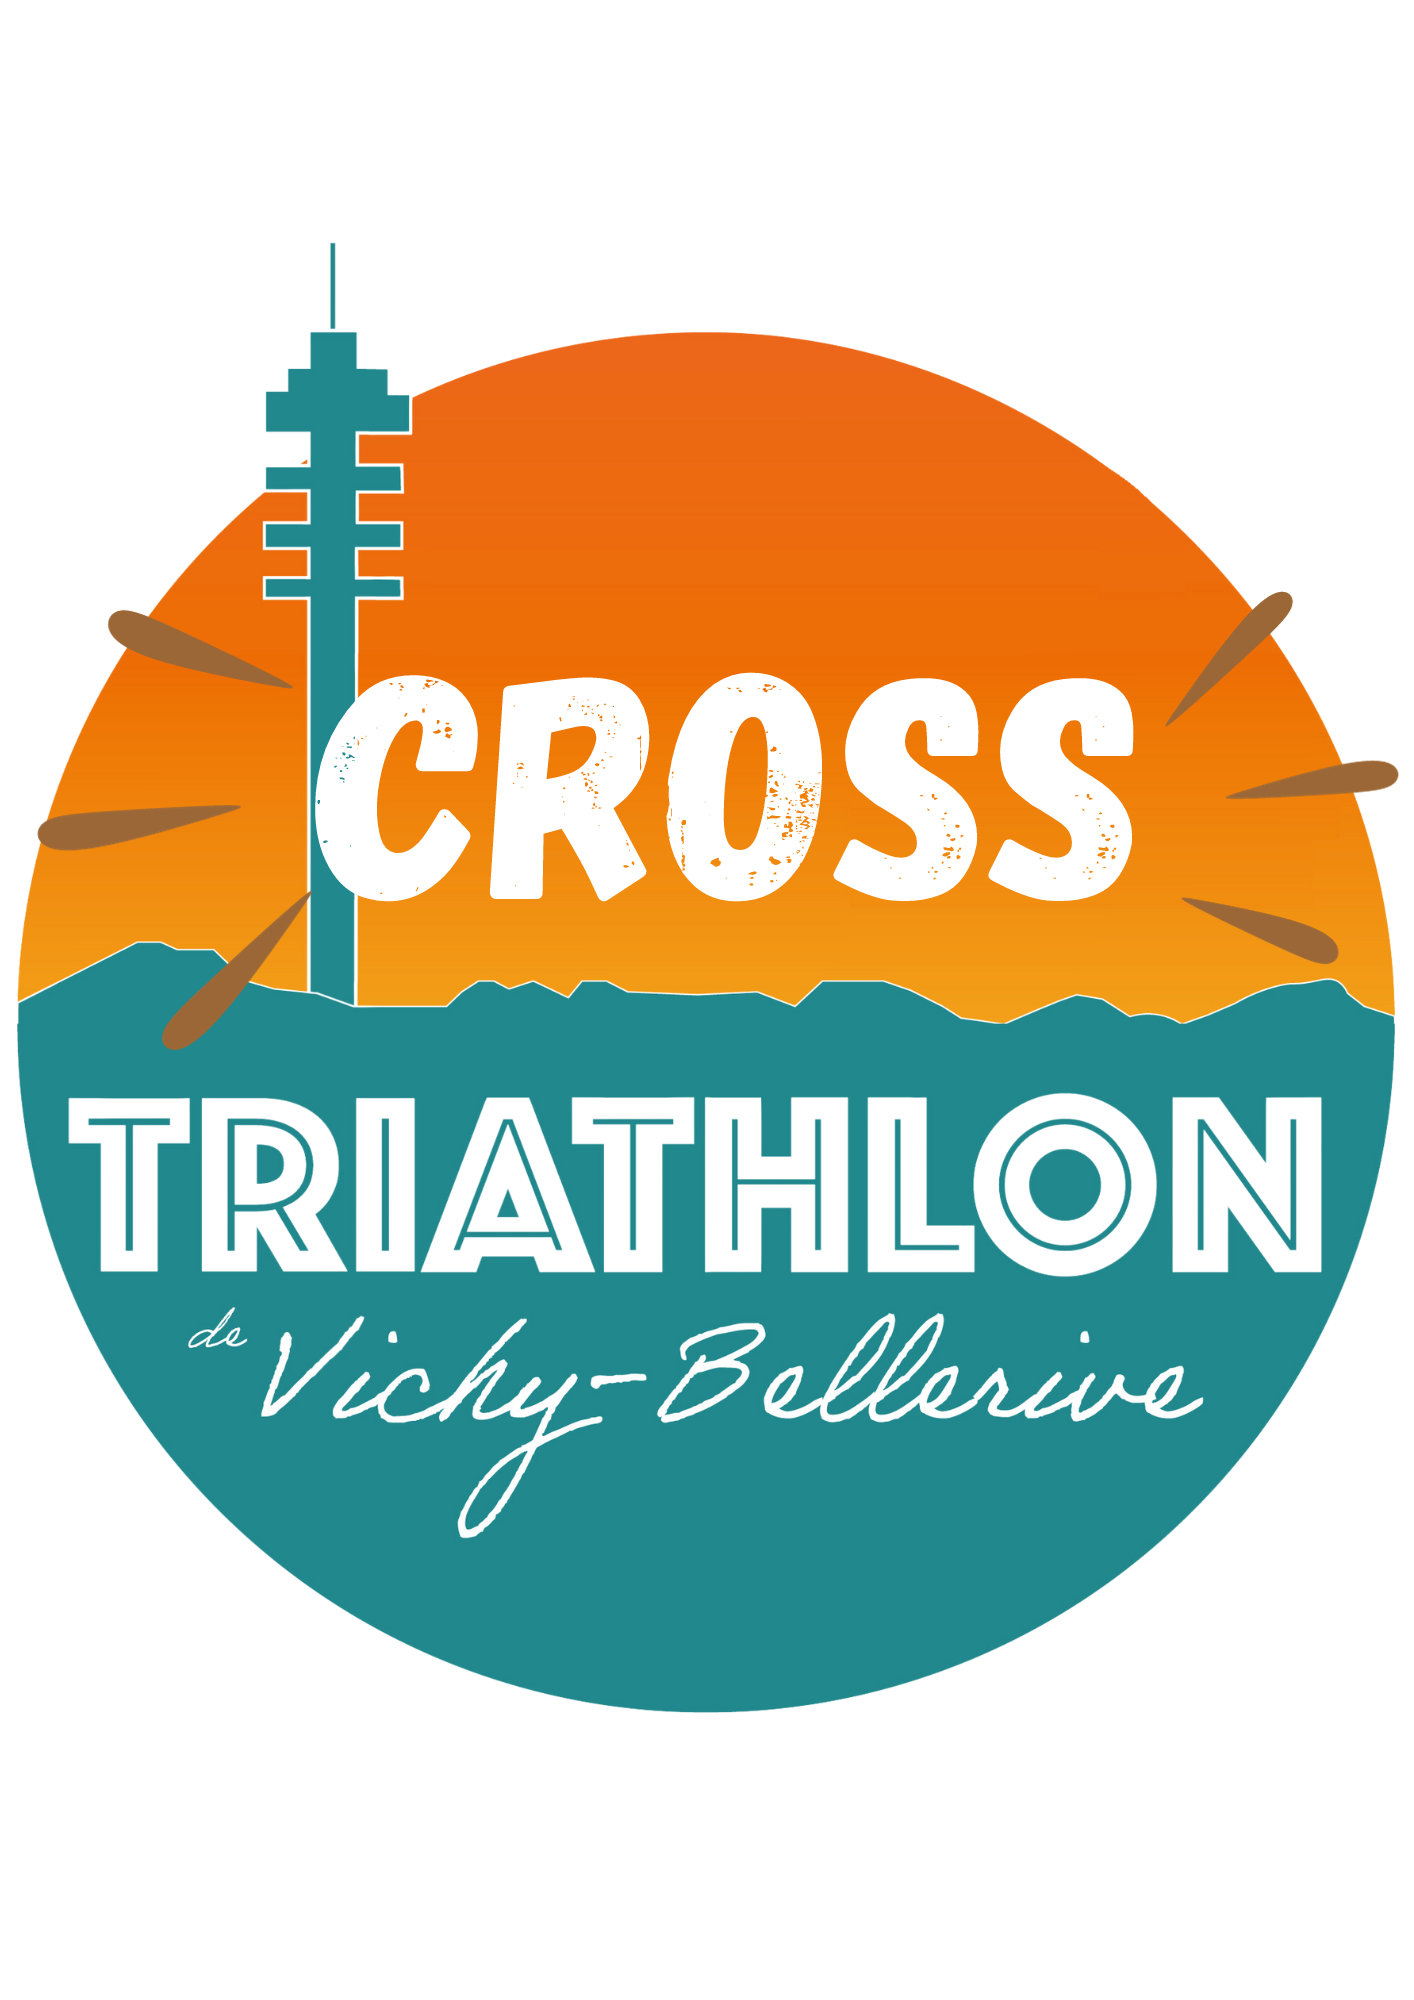 Image Cross Triathlon de Vichy Bellerive (03) - S